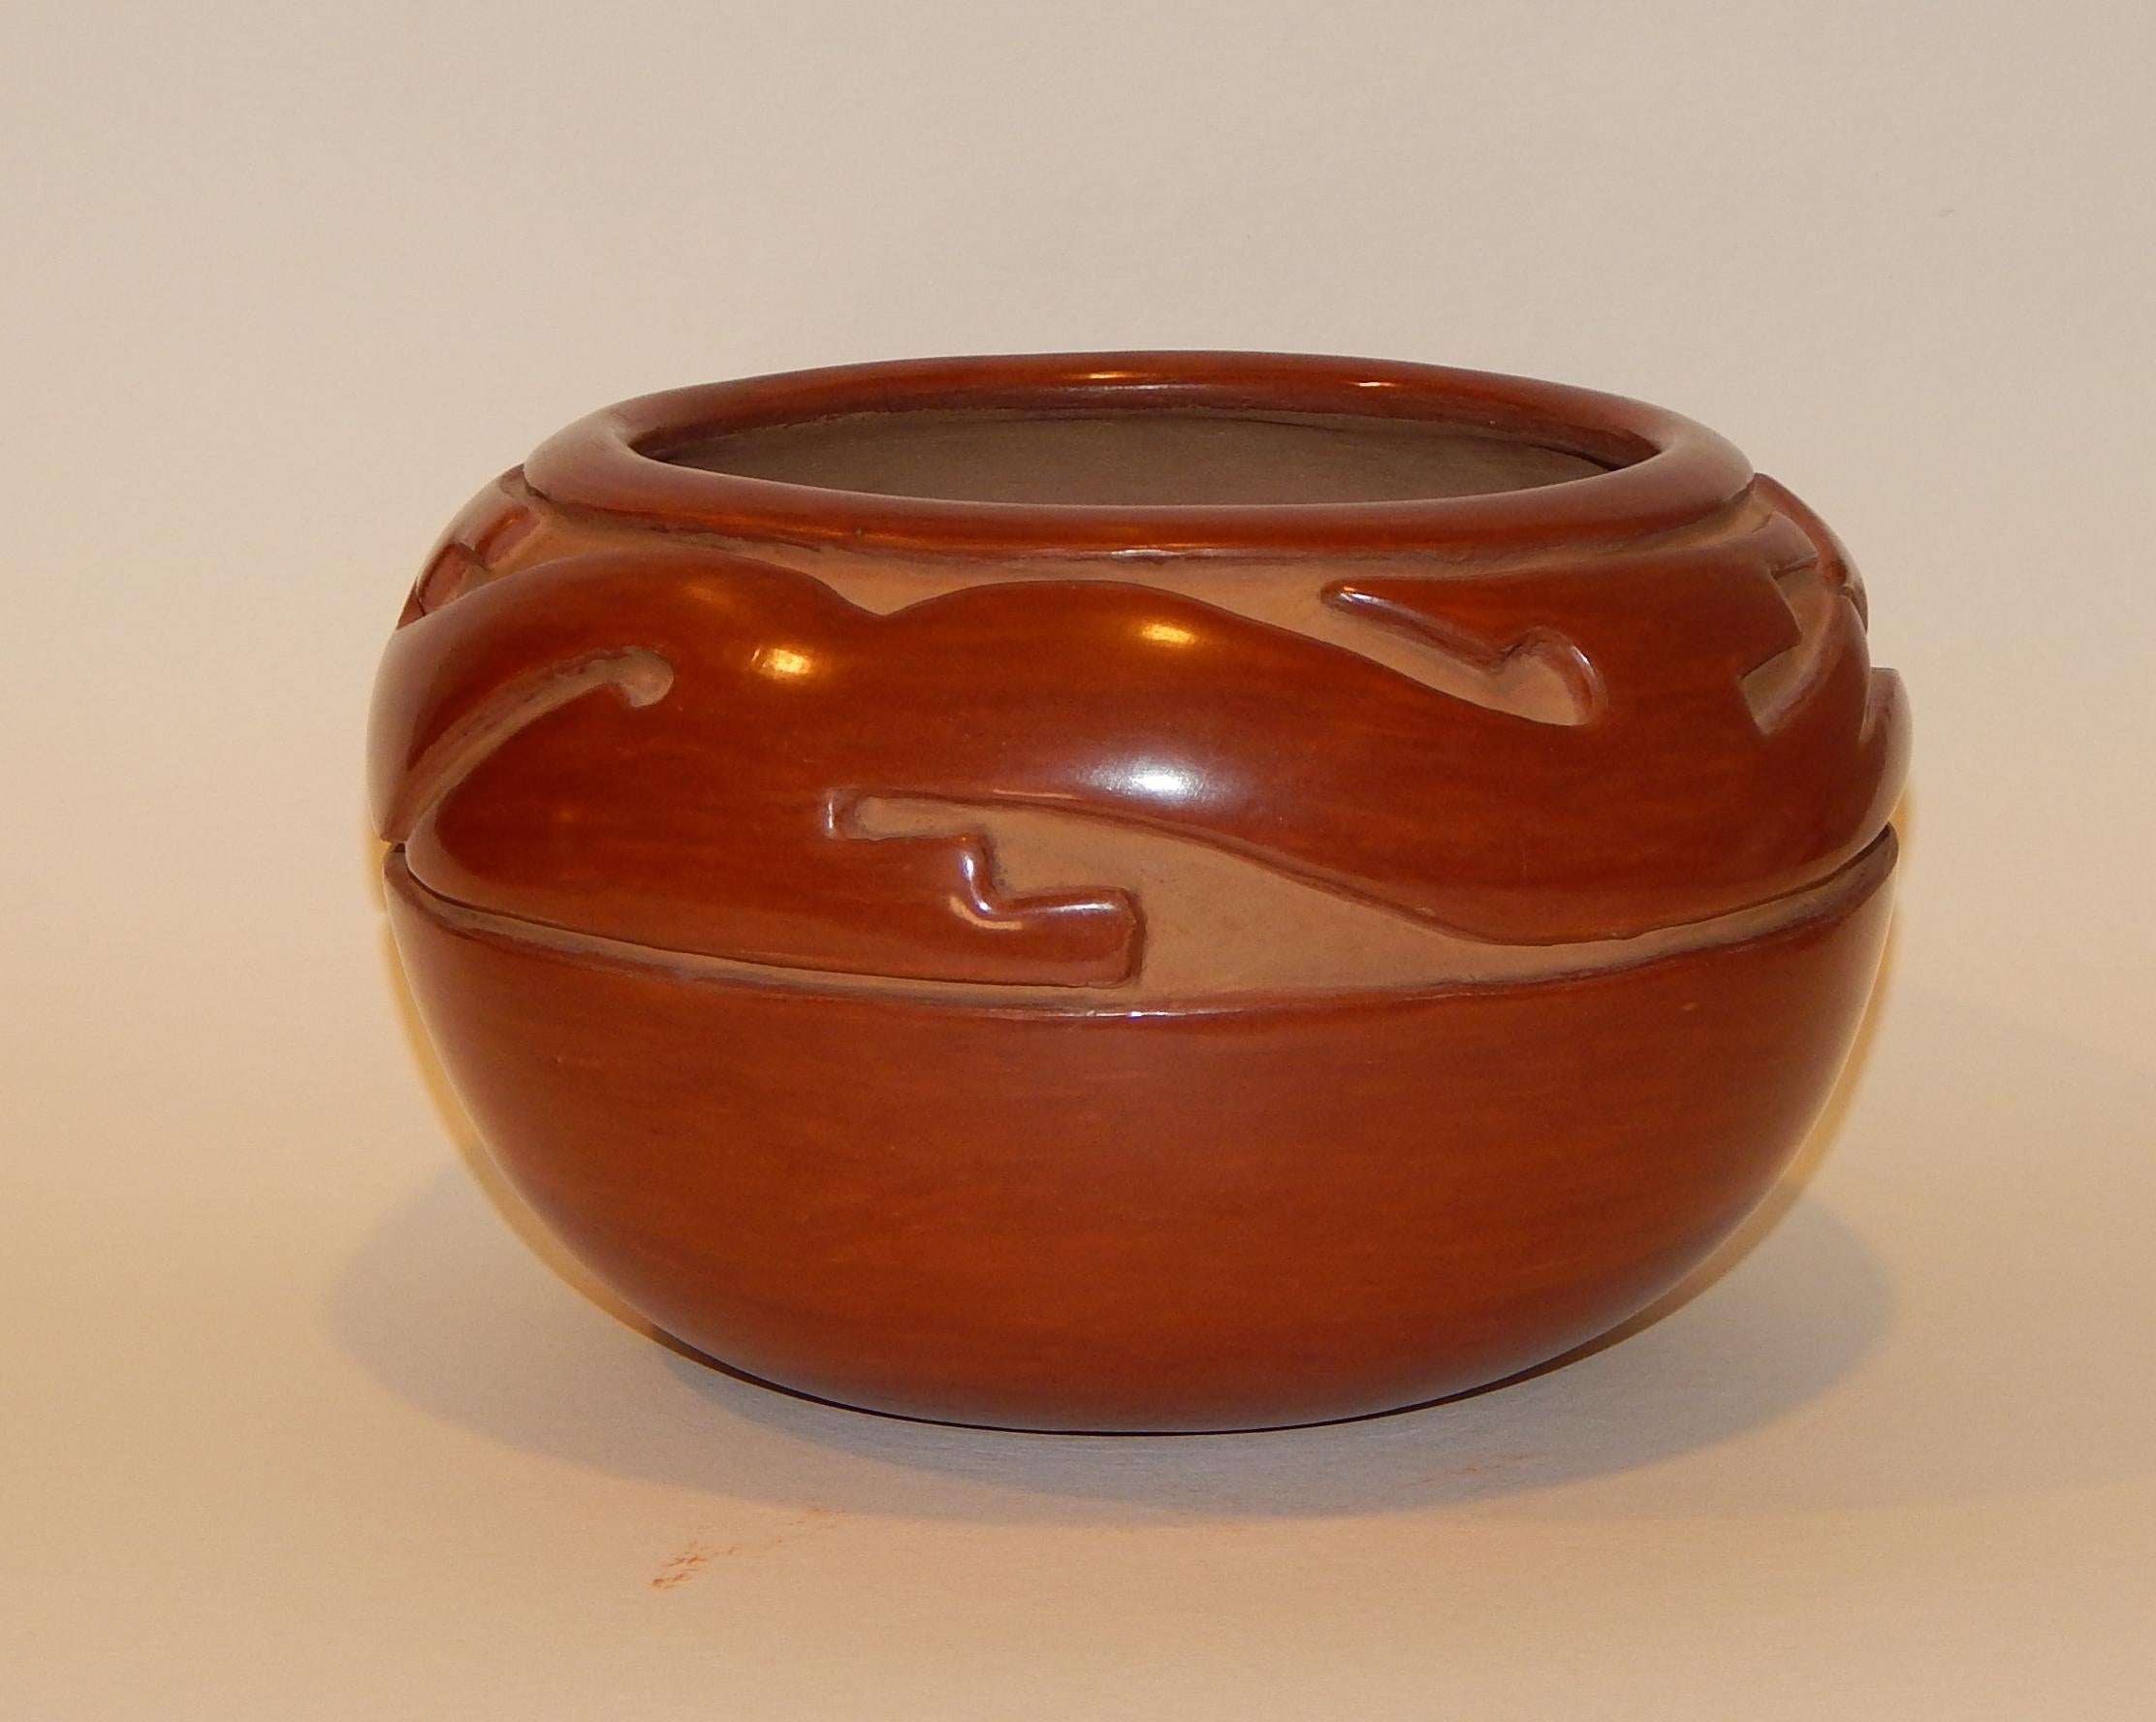 Margaret Tafoya (1904-2001) Santa Clara Pueblo ceramic pot
Incised and polished redware. Measures: 5 ½” H x 9